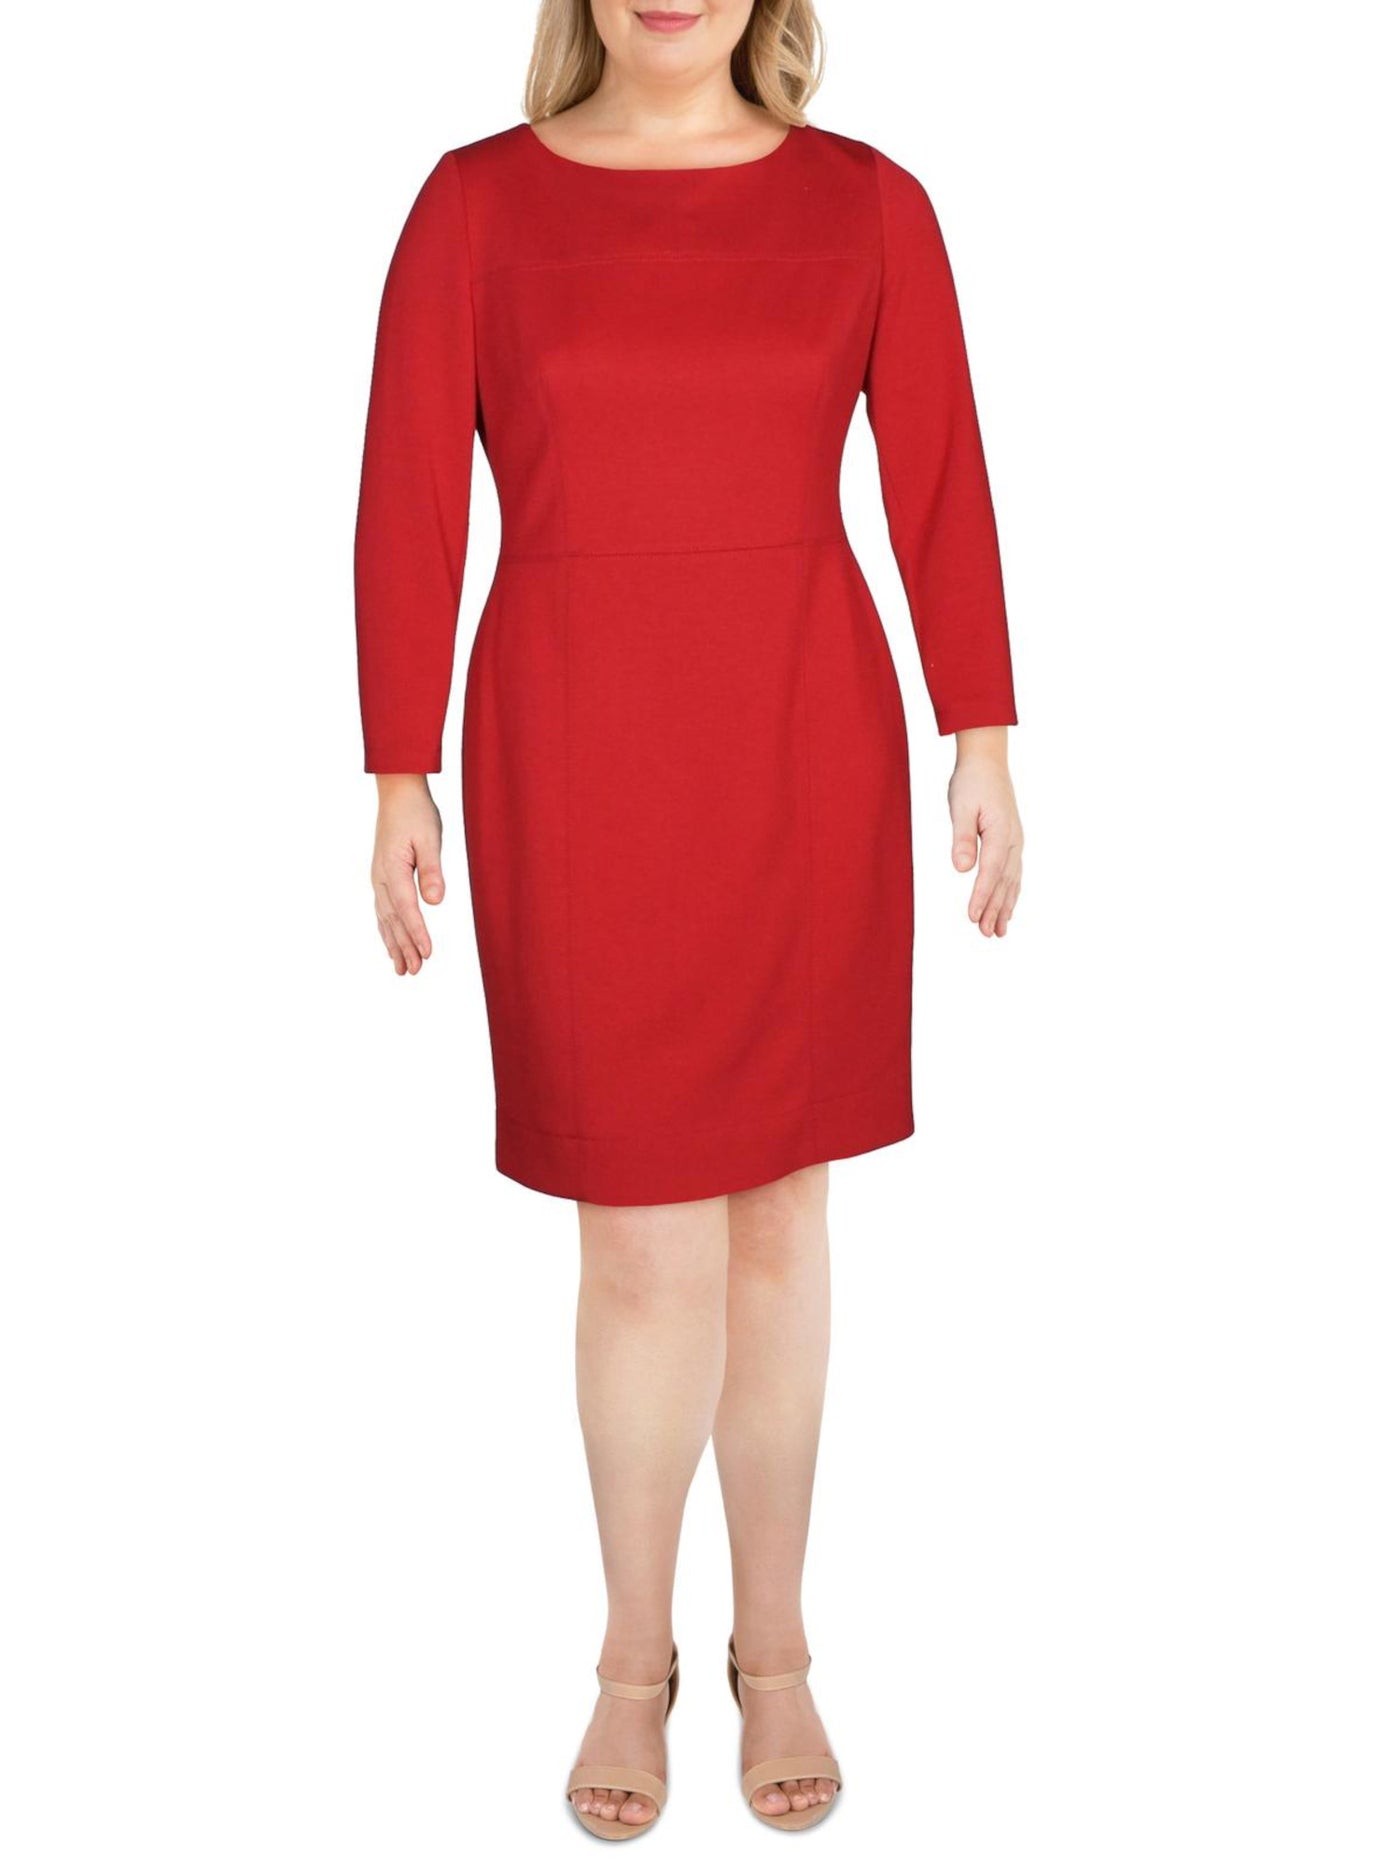 ANNE KLEIN Womens Red Short Sleeve Jewel Neck Short Sheath Dress 4